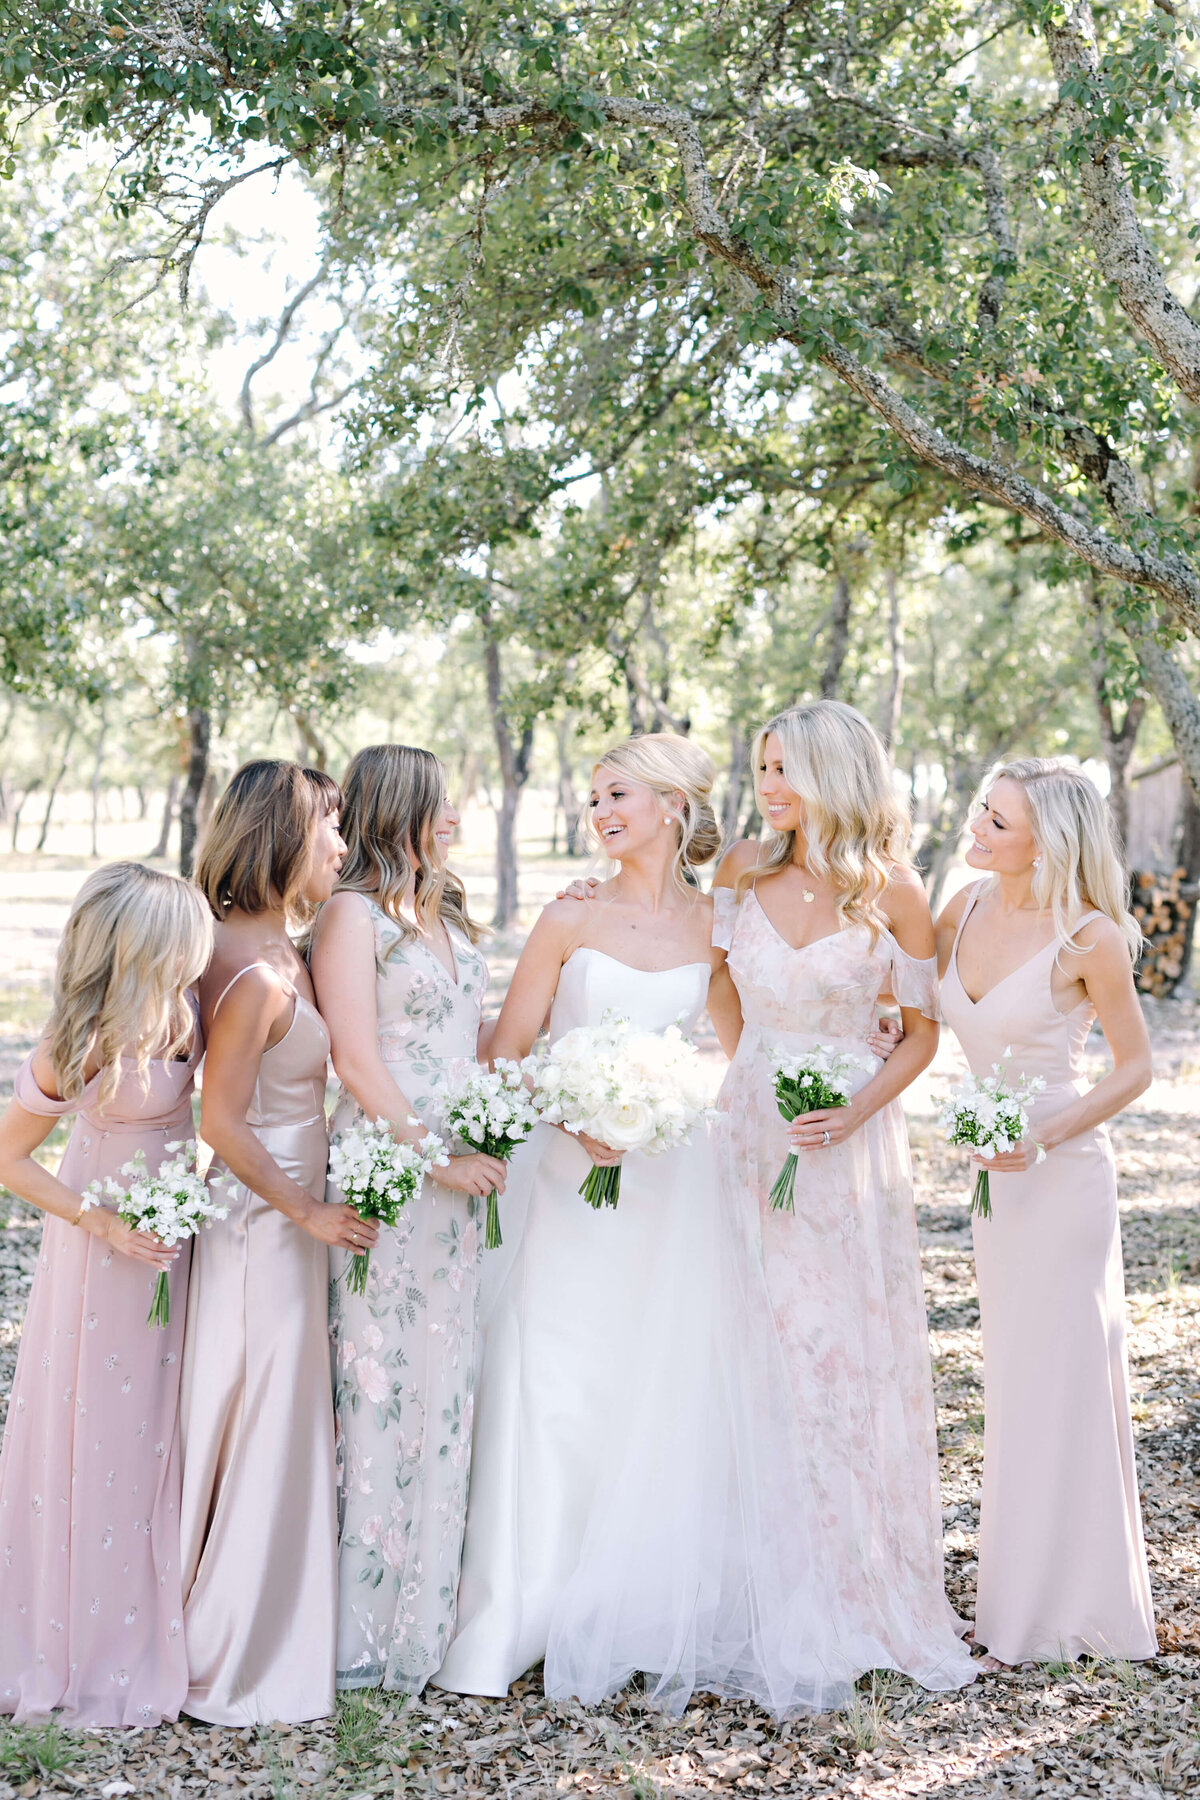 Blush and floral bridesmaids dresses